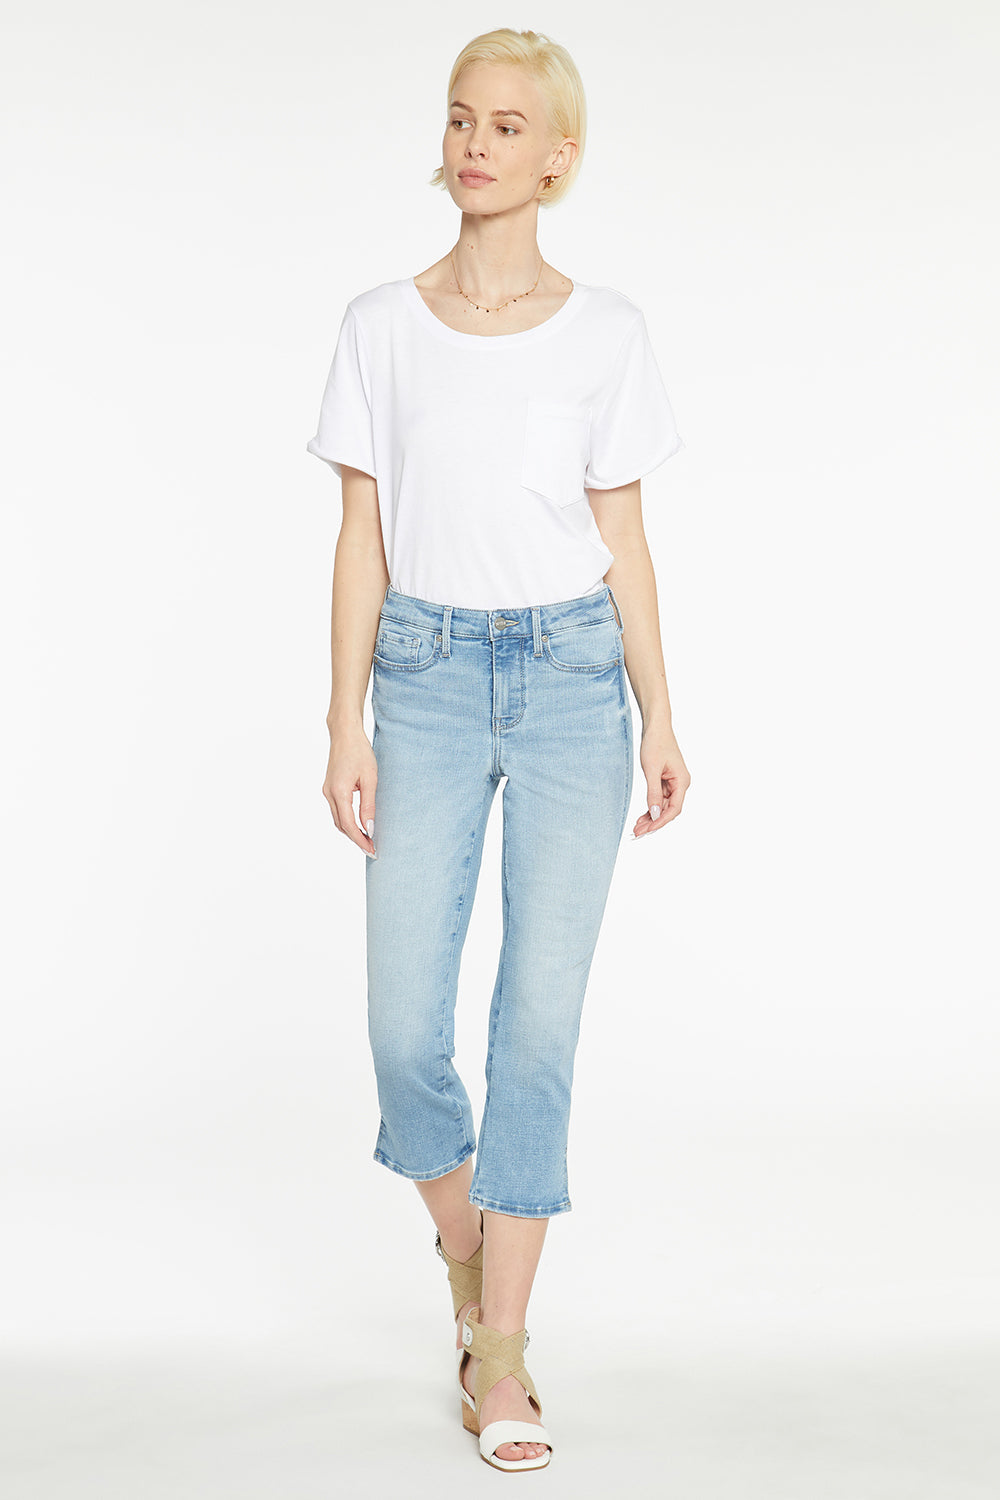 NYDJ Chloe Capri Jeans In Petite With Side Slits - Easley